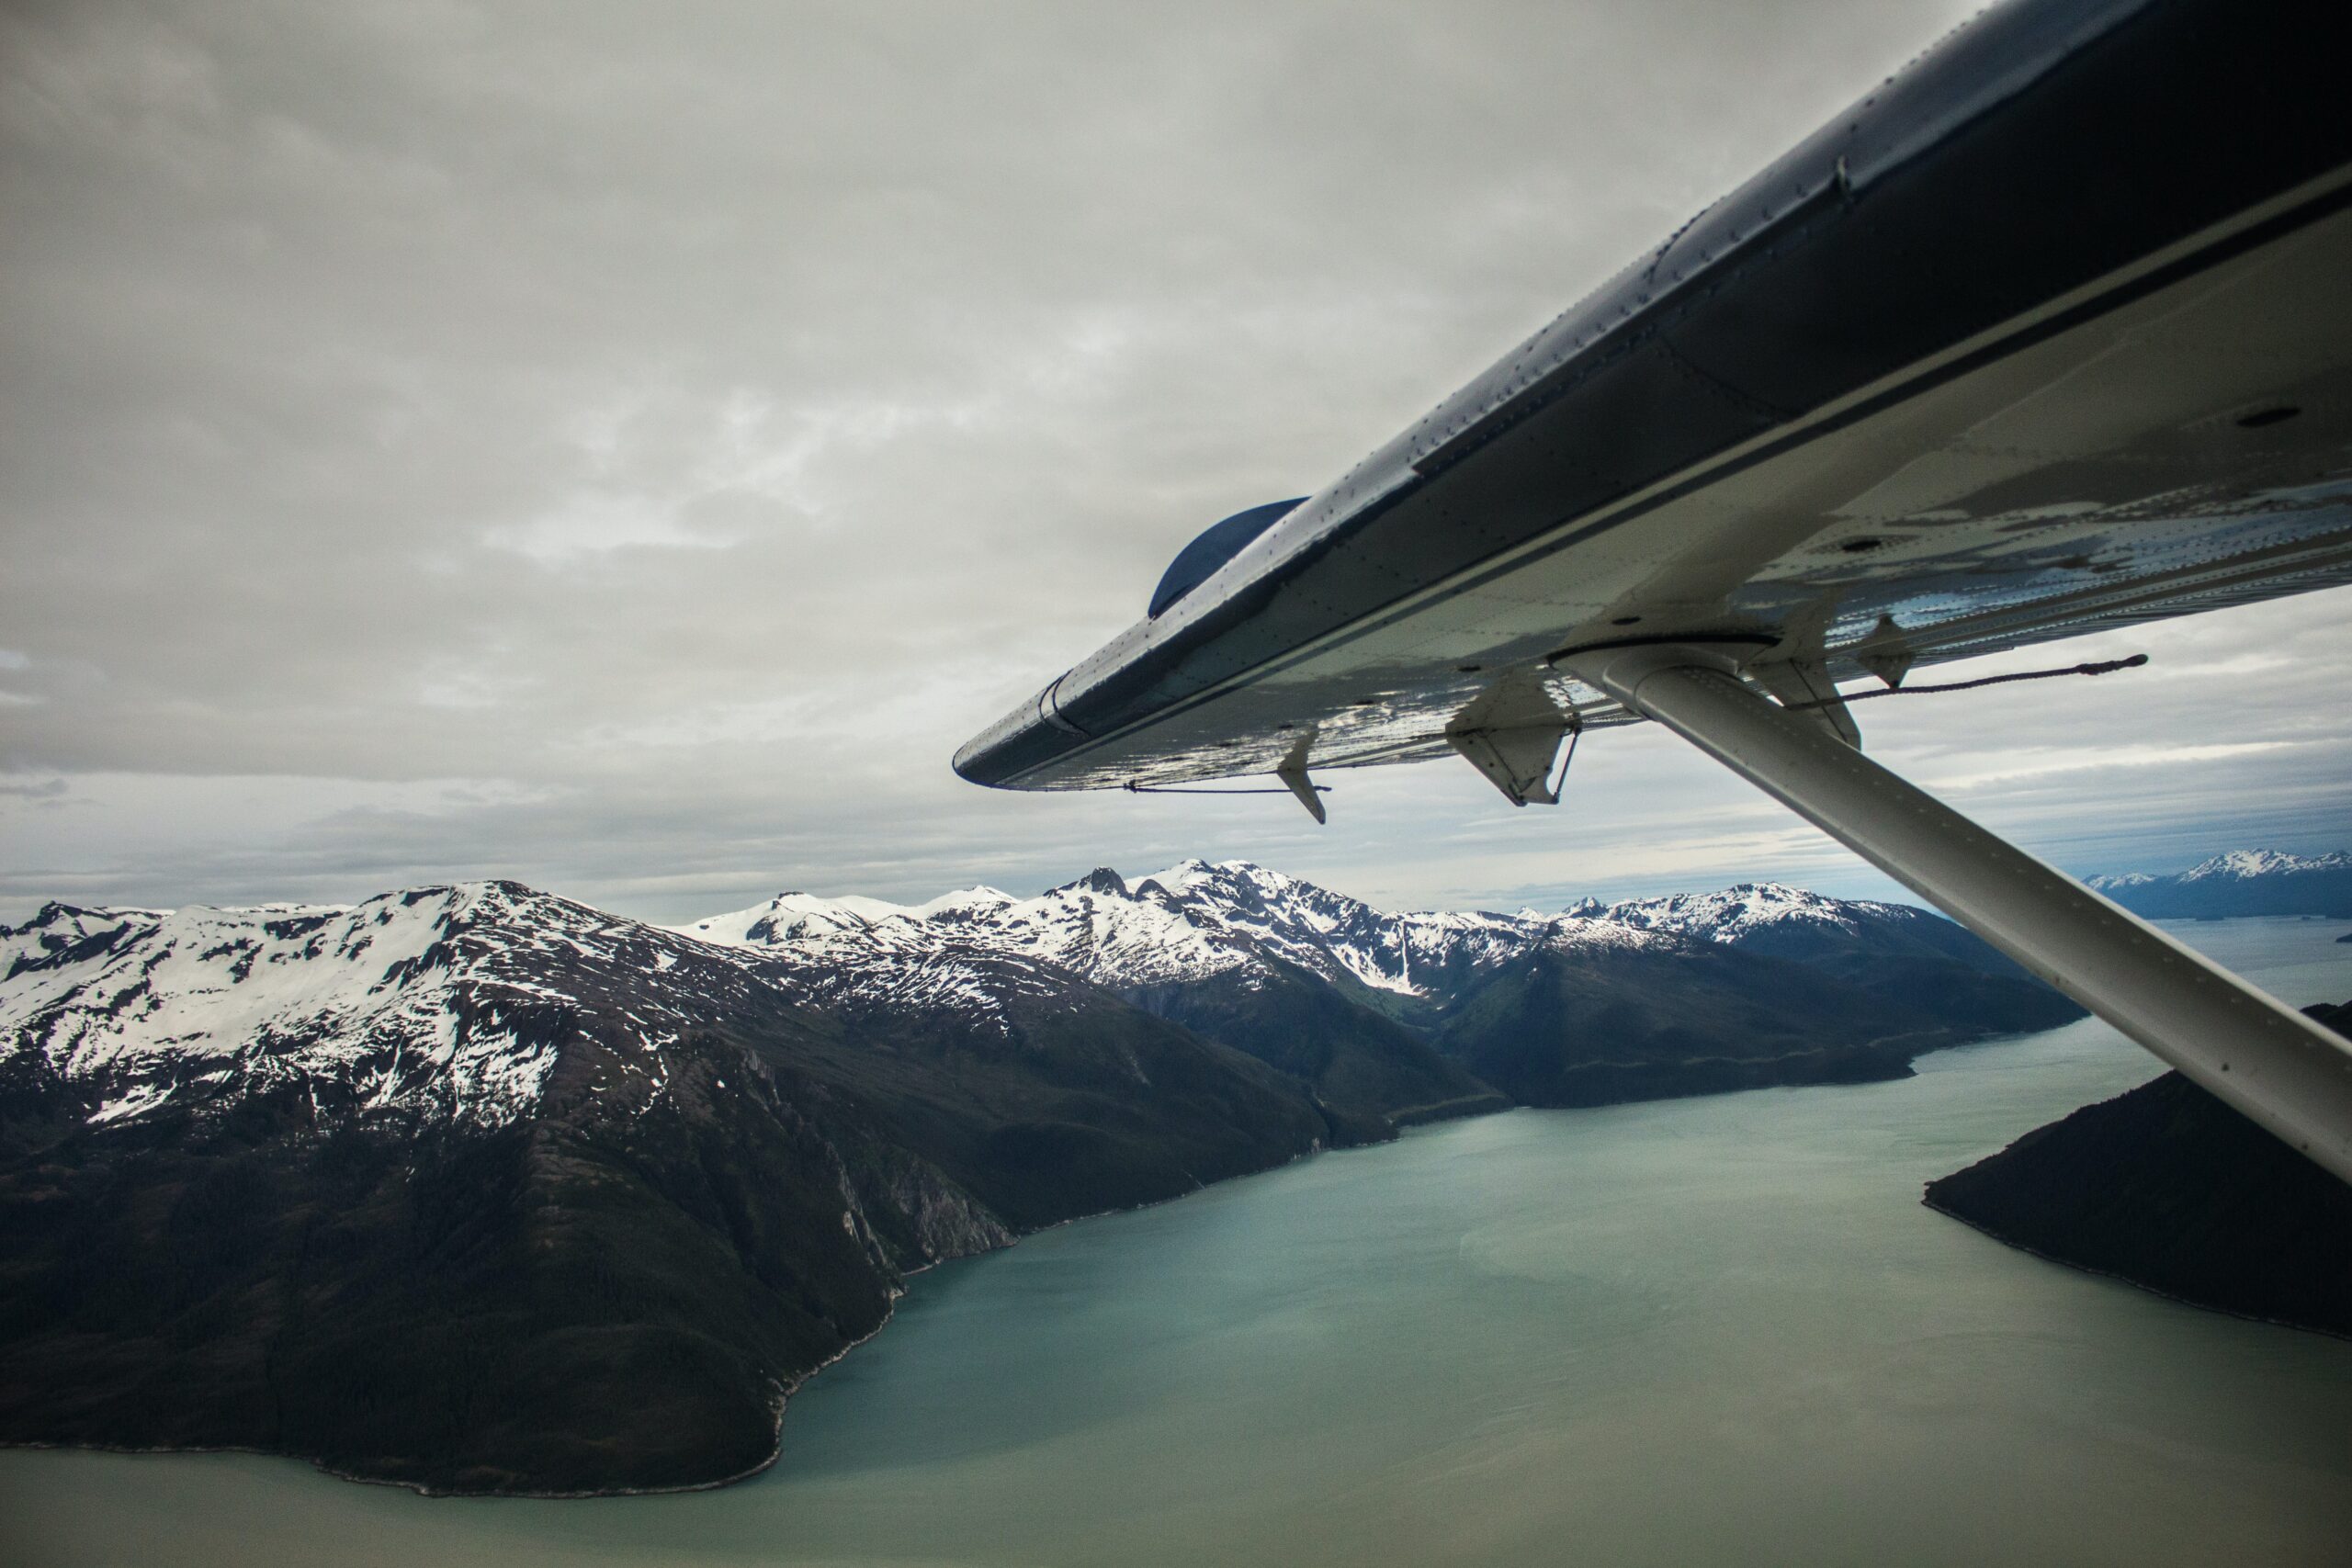 sea plane wing in Alaska